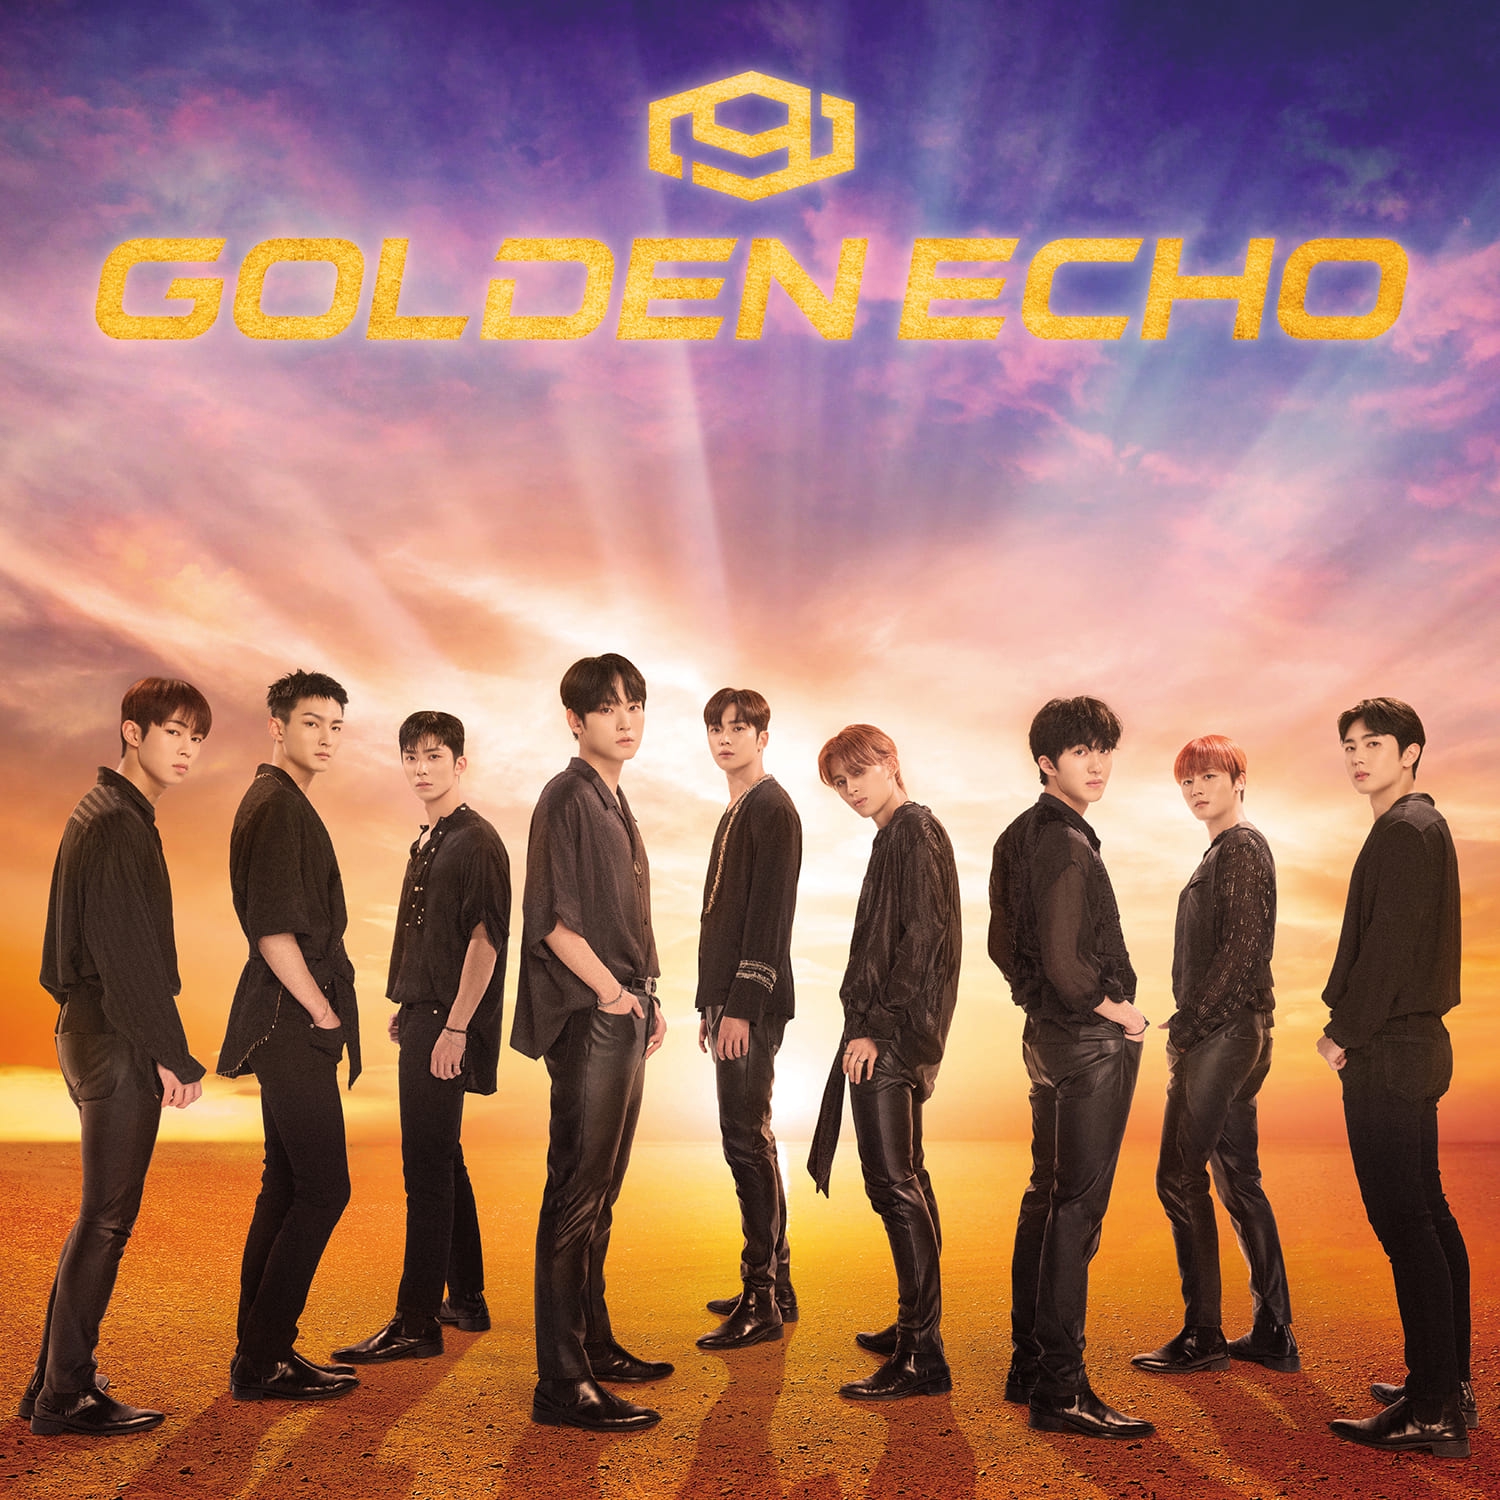 SF9 JAPAN 3rdアルバム『GOLDEN ECHO』発売決定！「RPM 